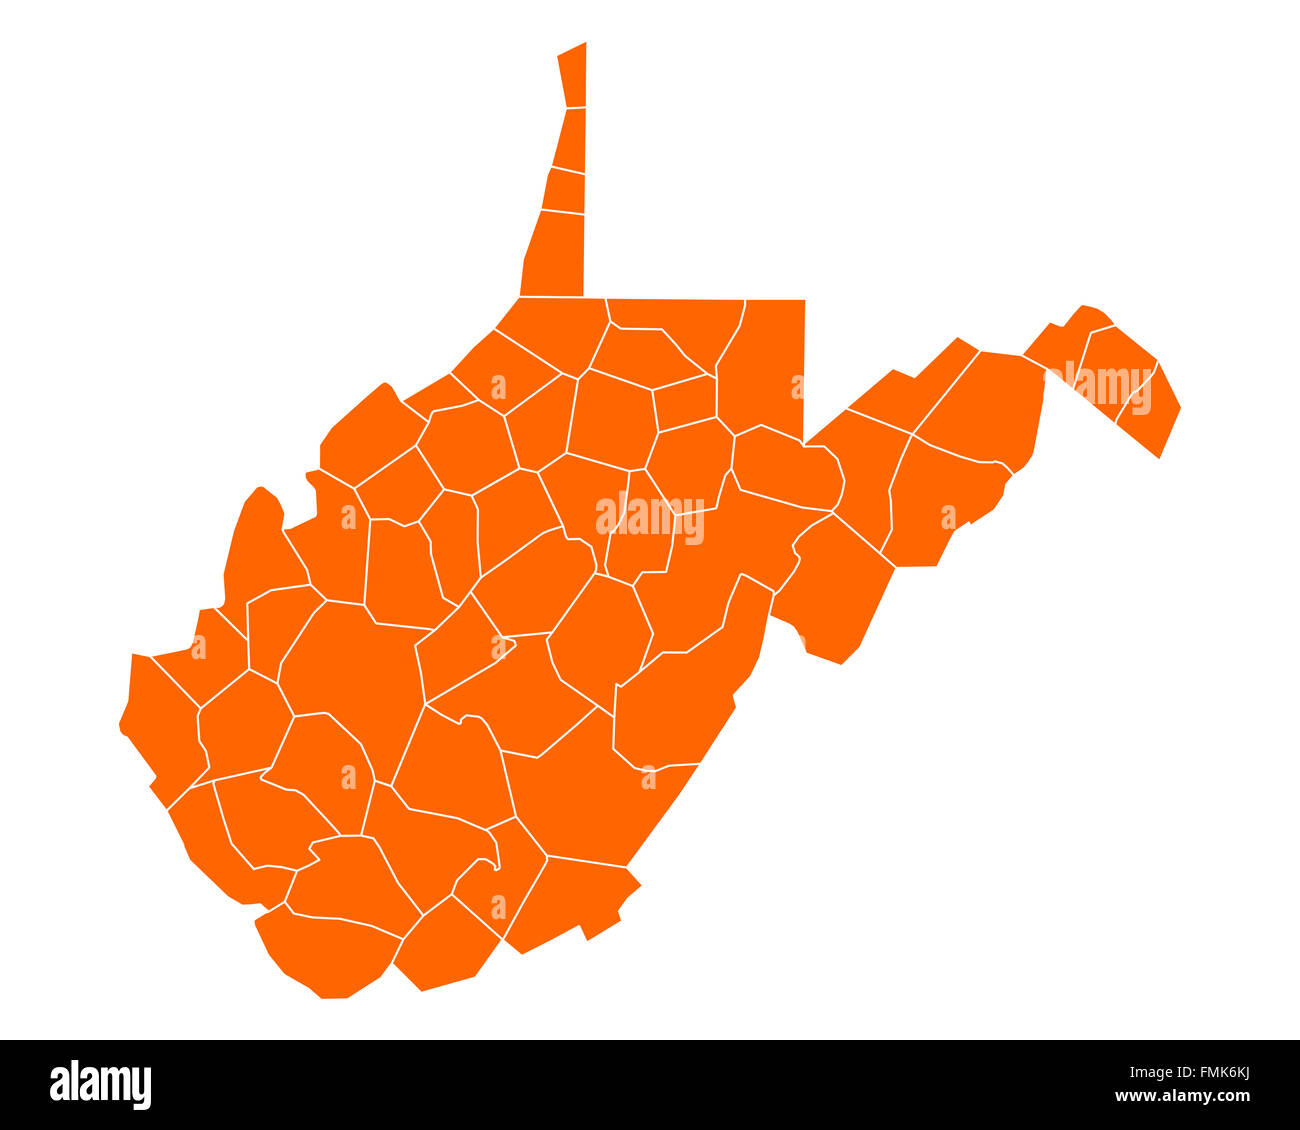 Mapa de West Virginia Foto de stock